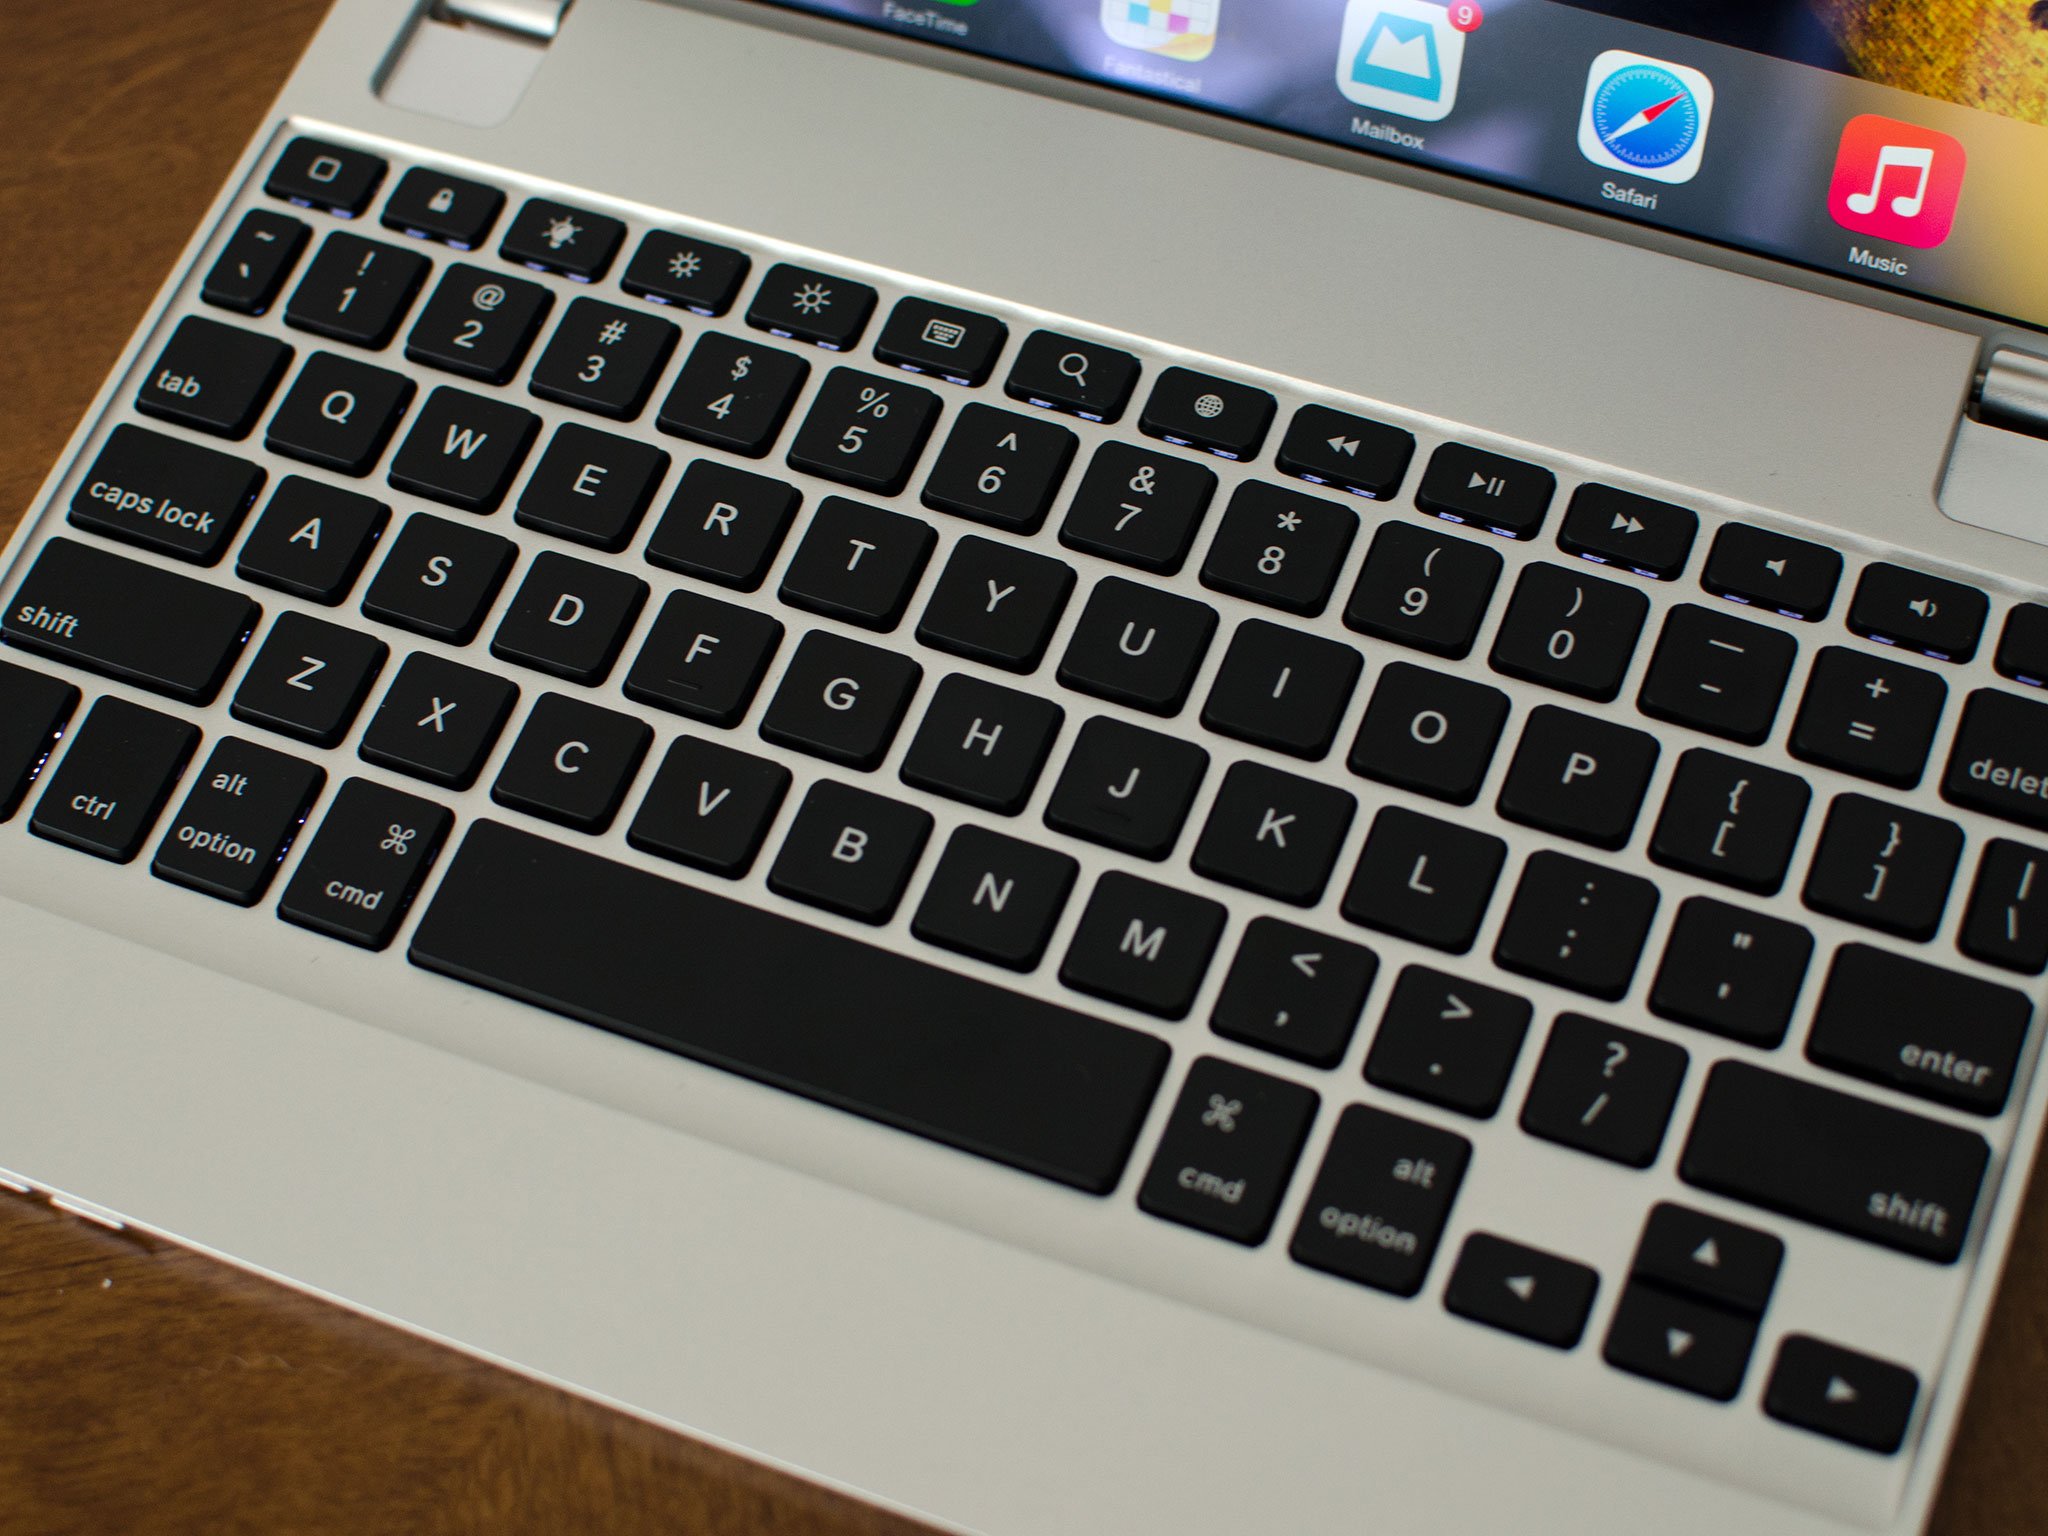 BrydgeAir keyboard for iPad Air 2 review